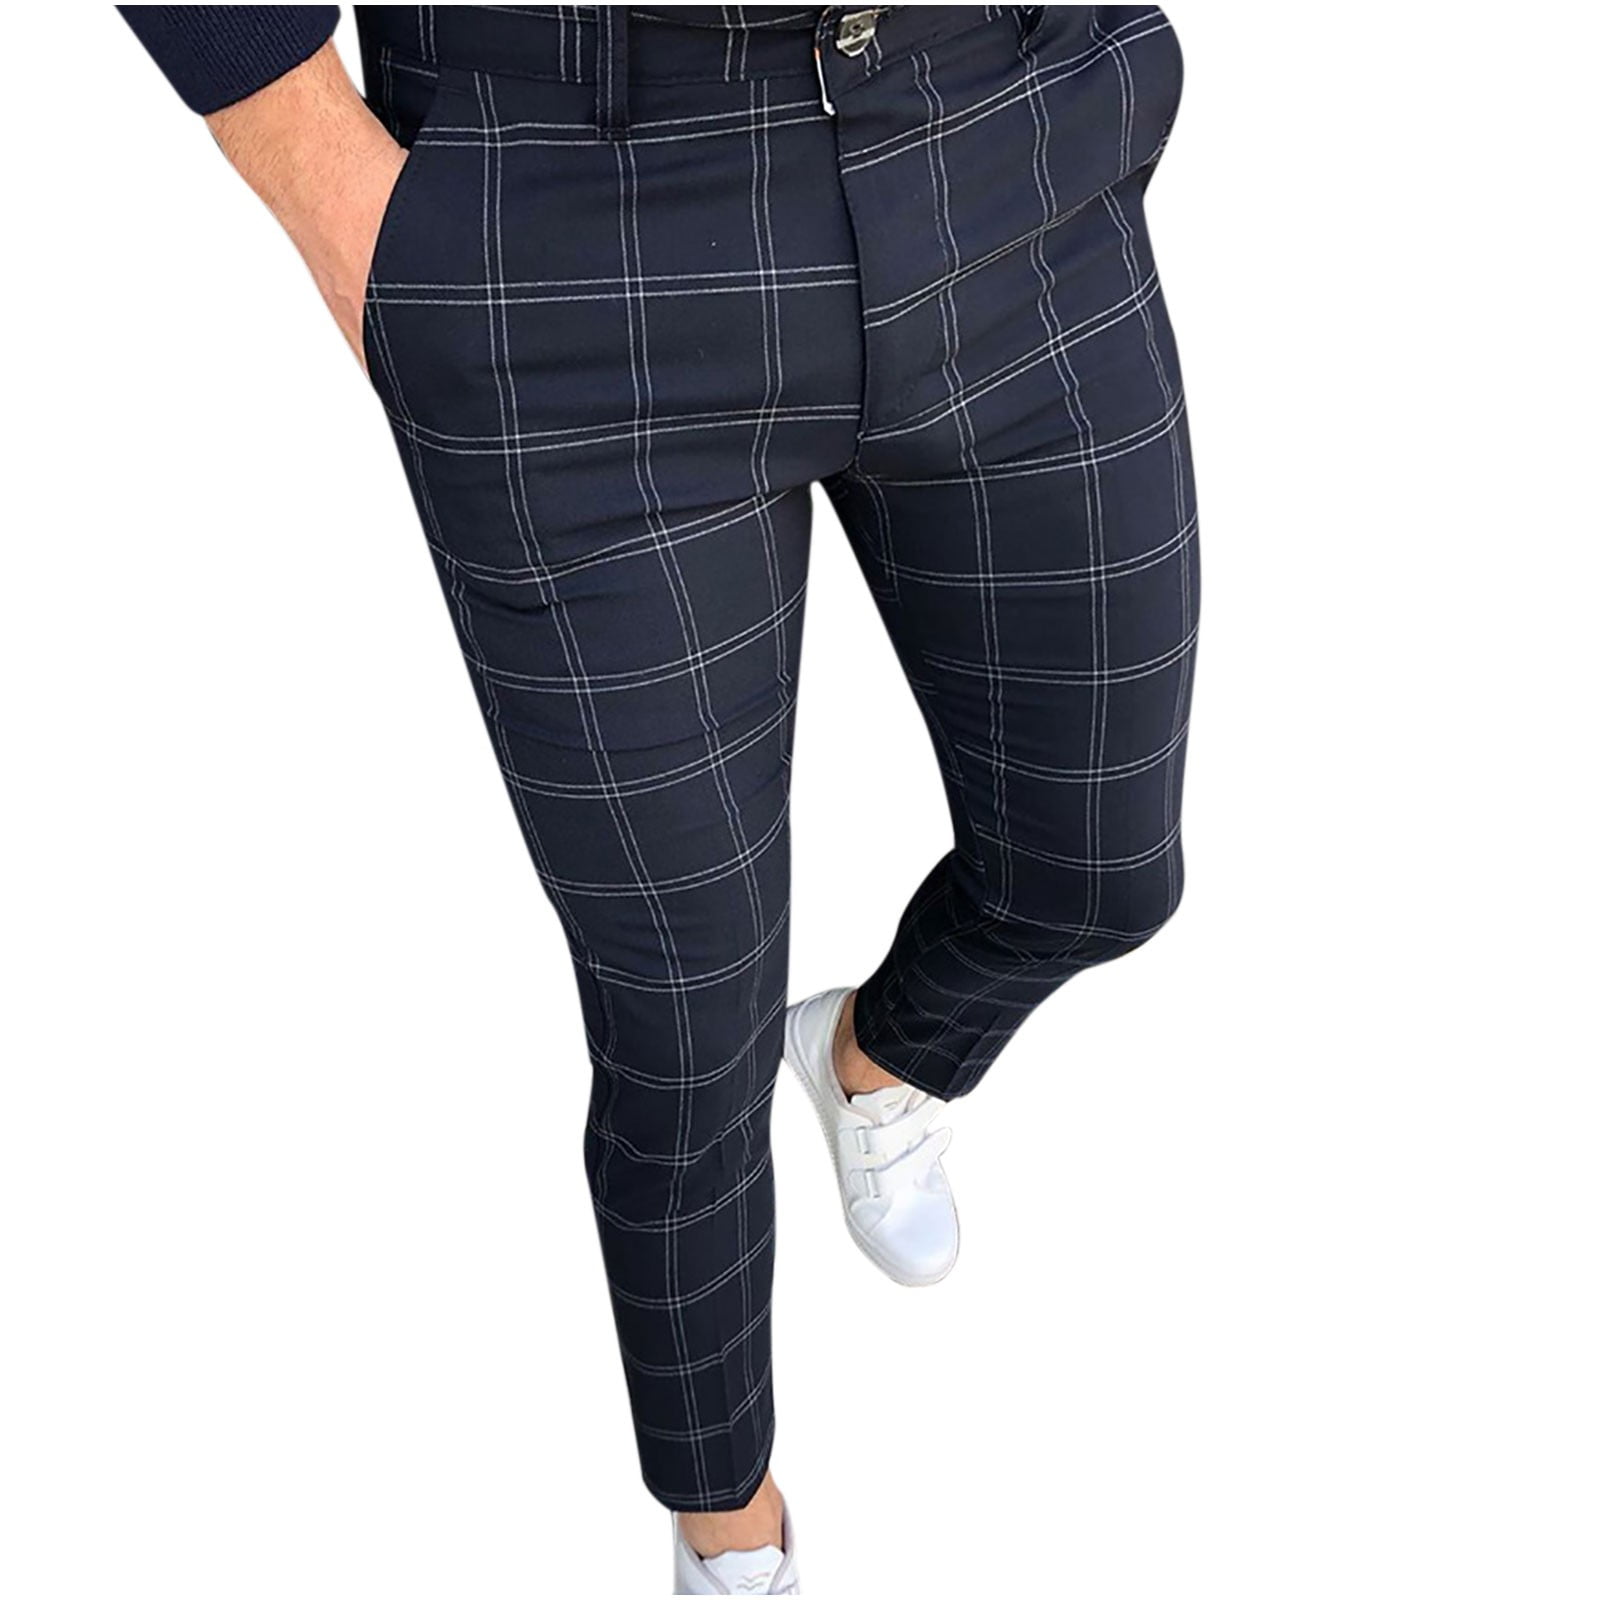 Mrat Full Length Pants Loose Pants with Pockets Men Fashion